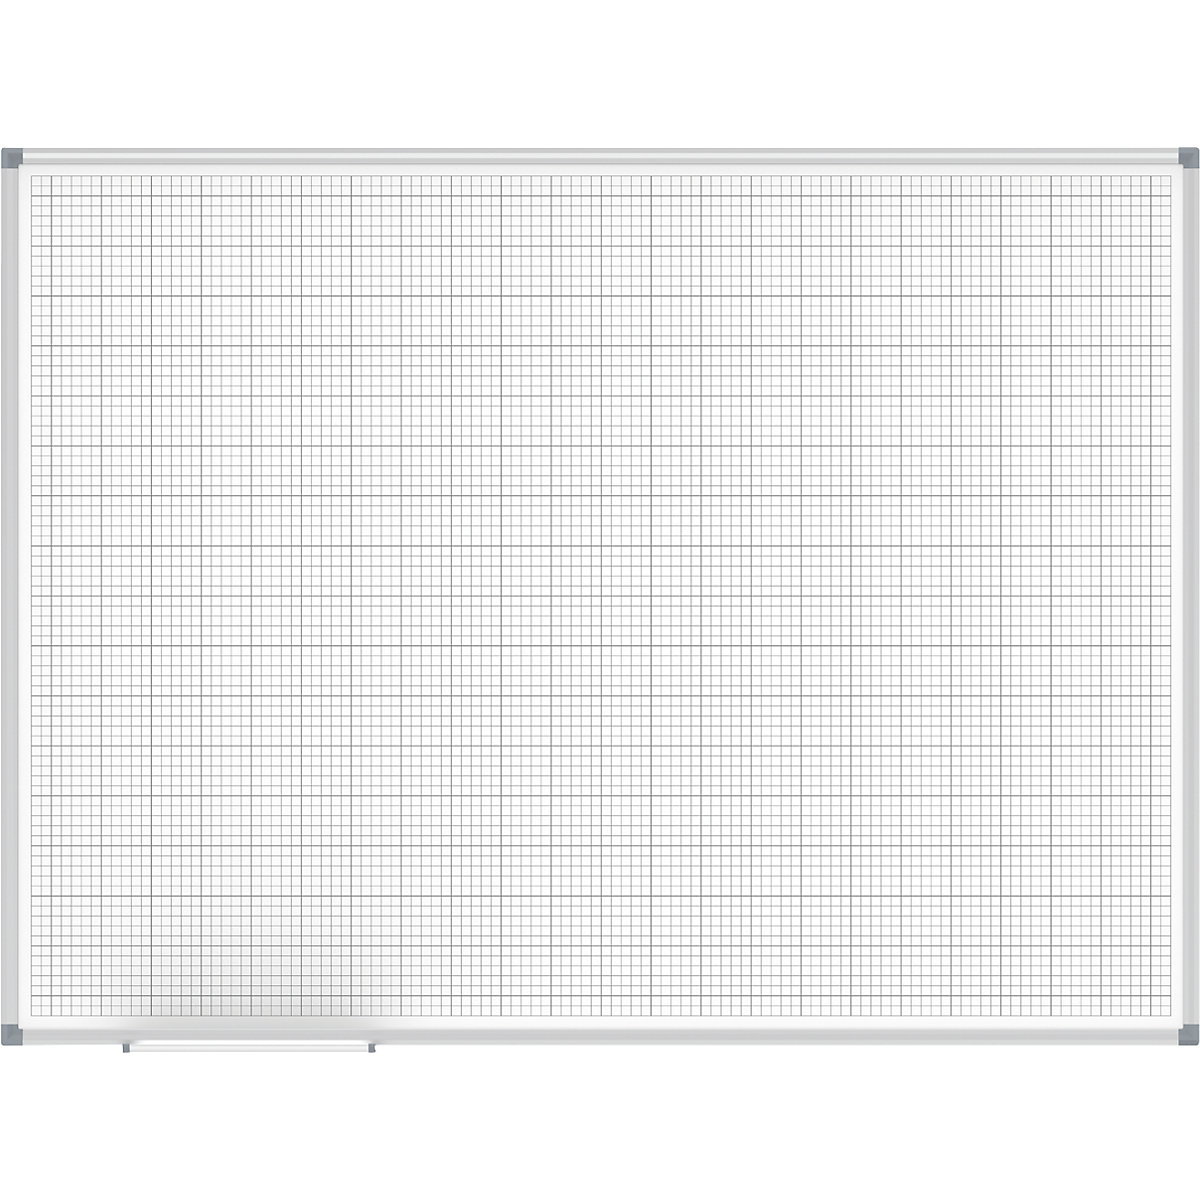 Tablă cu caroiaj MAULstandard, albă – MAUL, caroiaj 10 x 10 / 50 x 50 mm, lăț. x î. 1200 x 900 mm-4